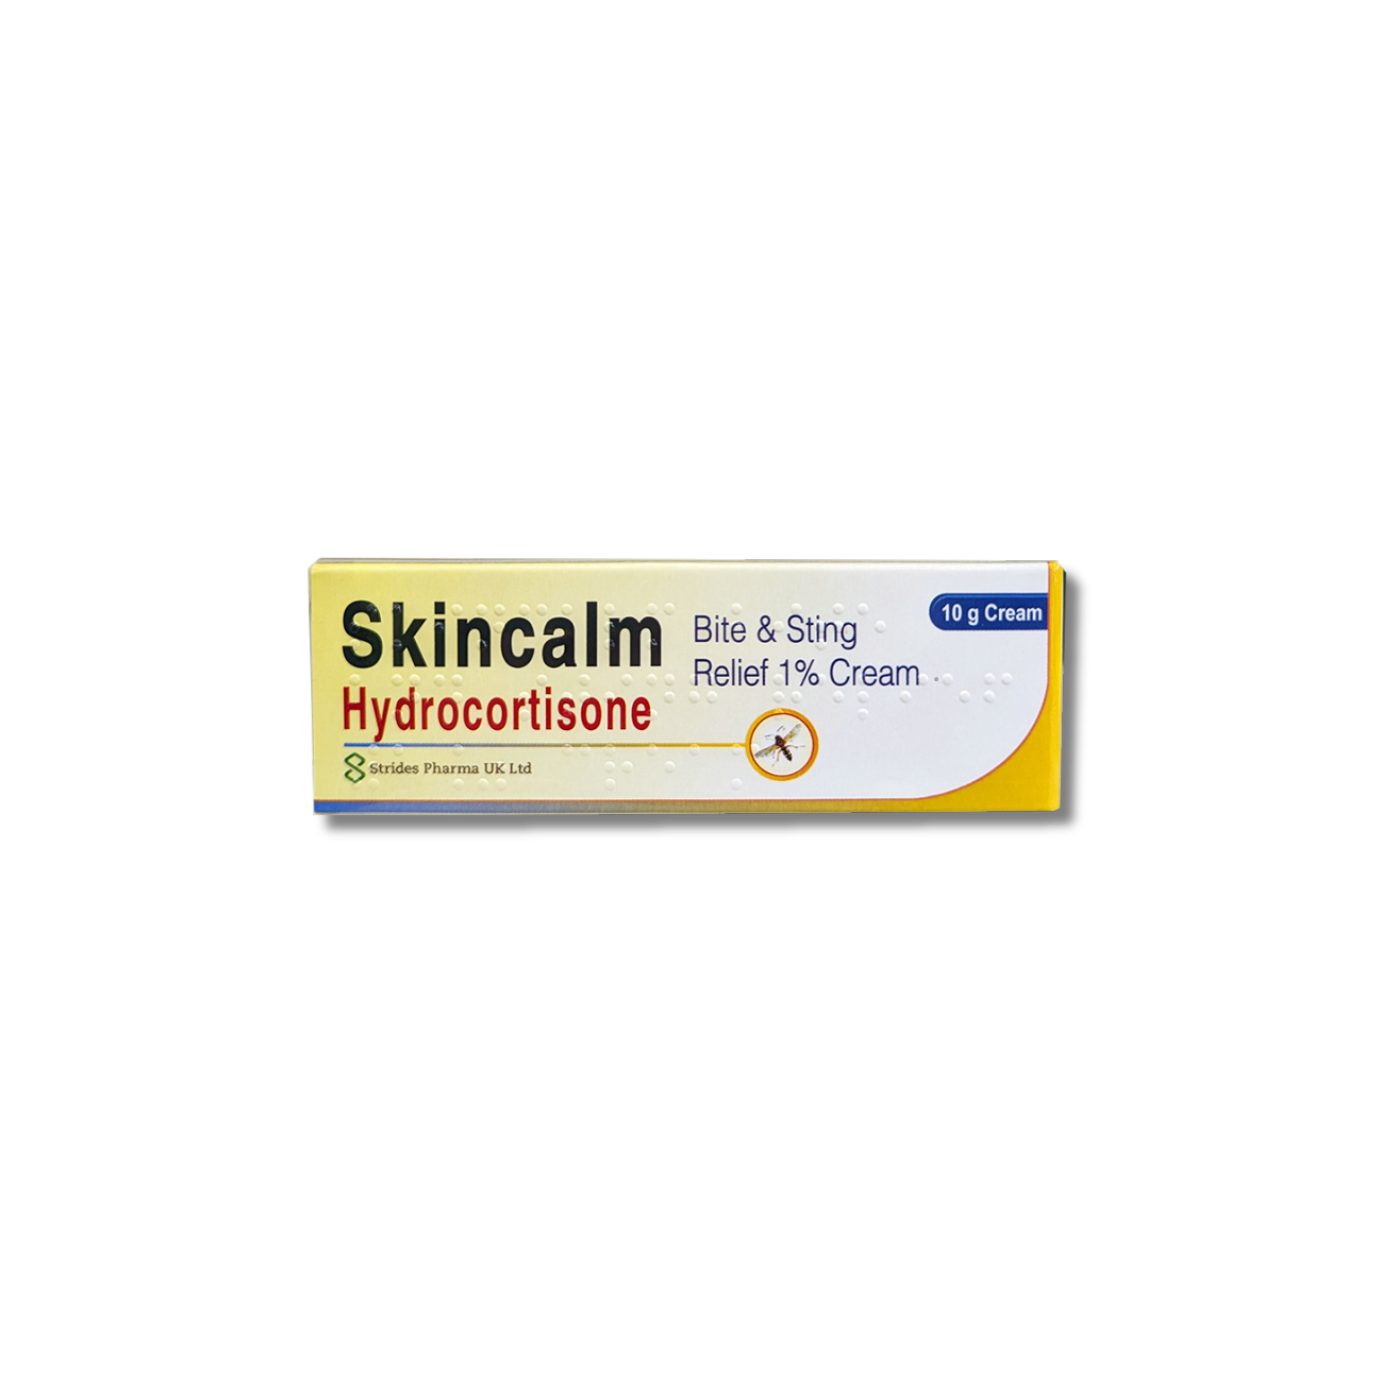 Skincalm Bite & Sting Relief Hydrocortisone Cream - 10g